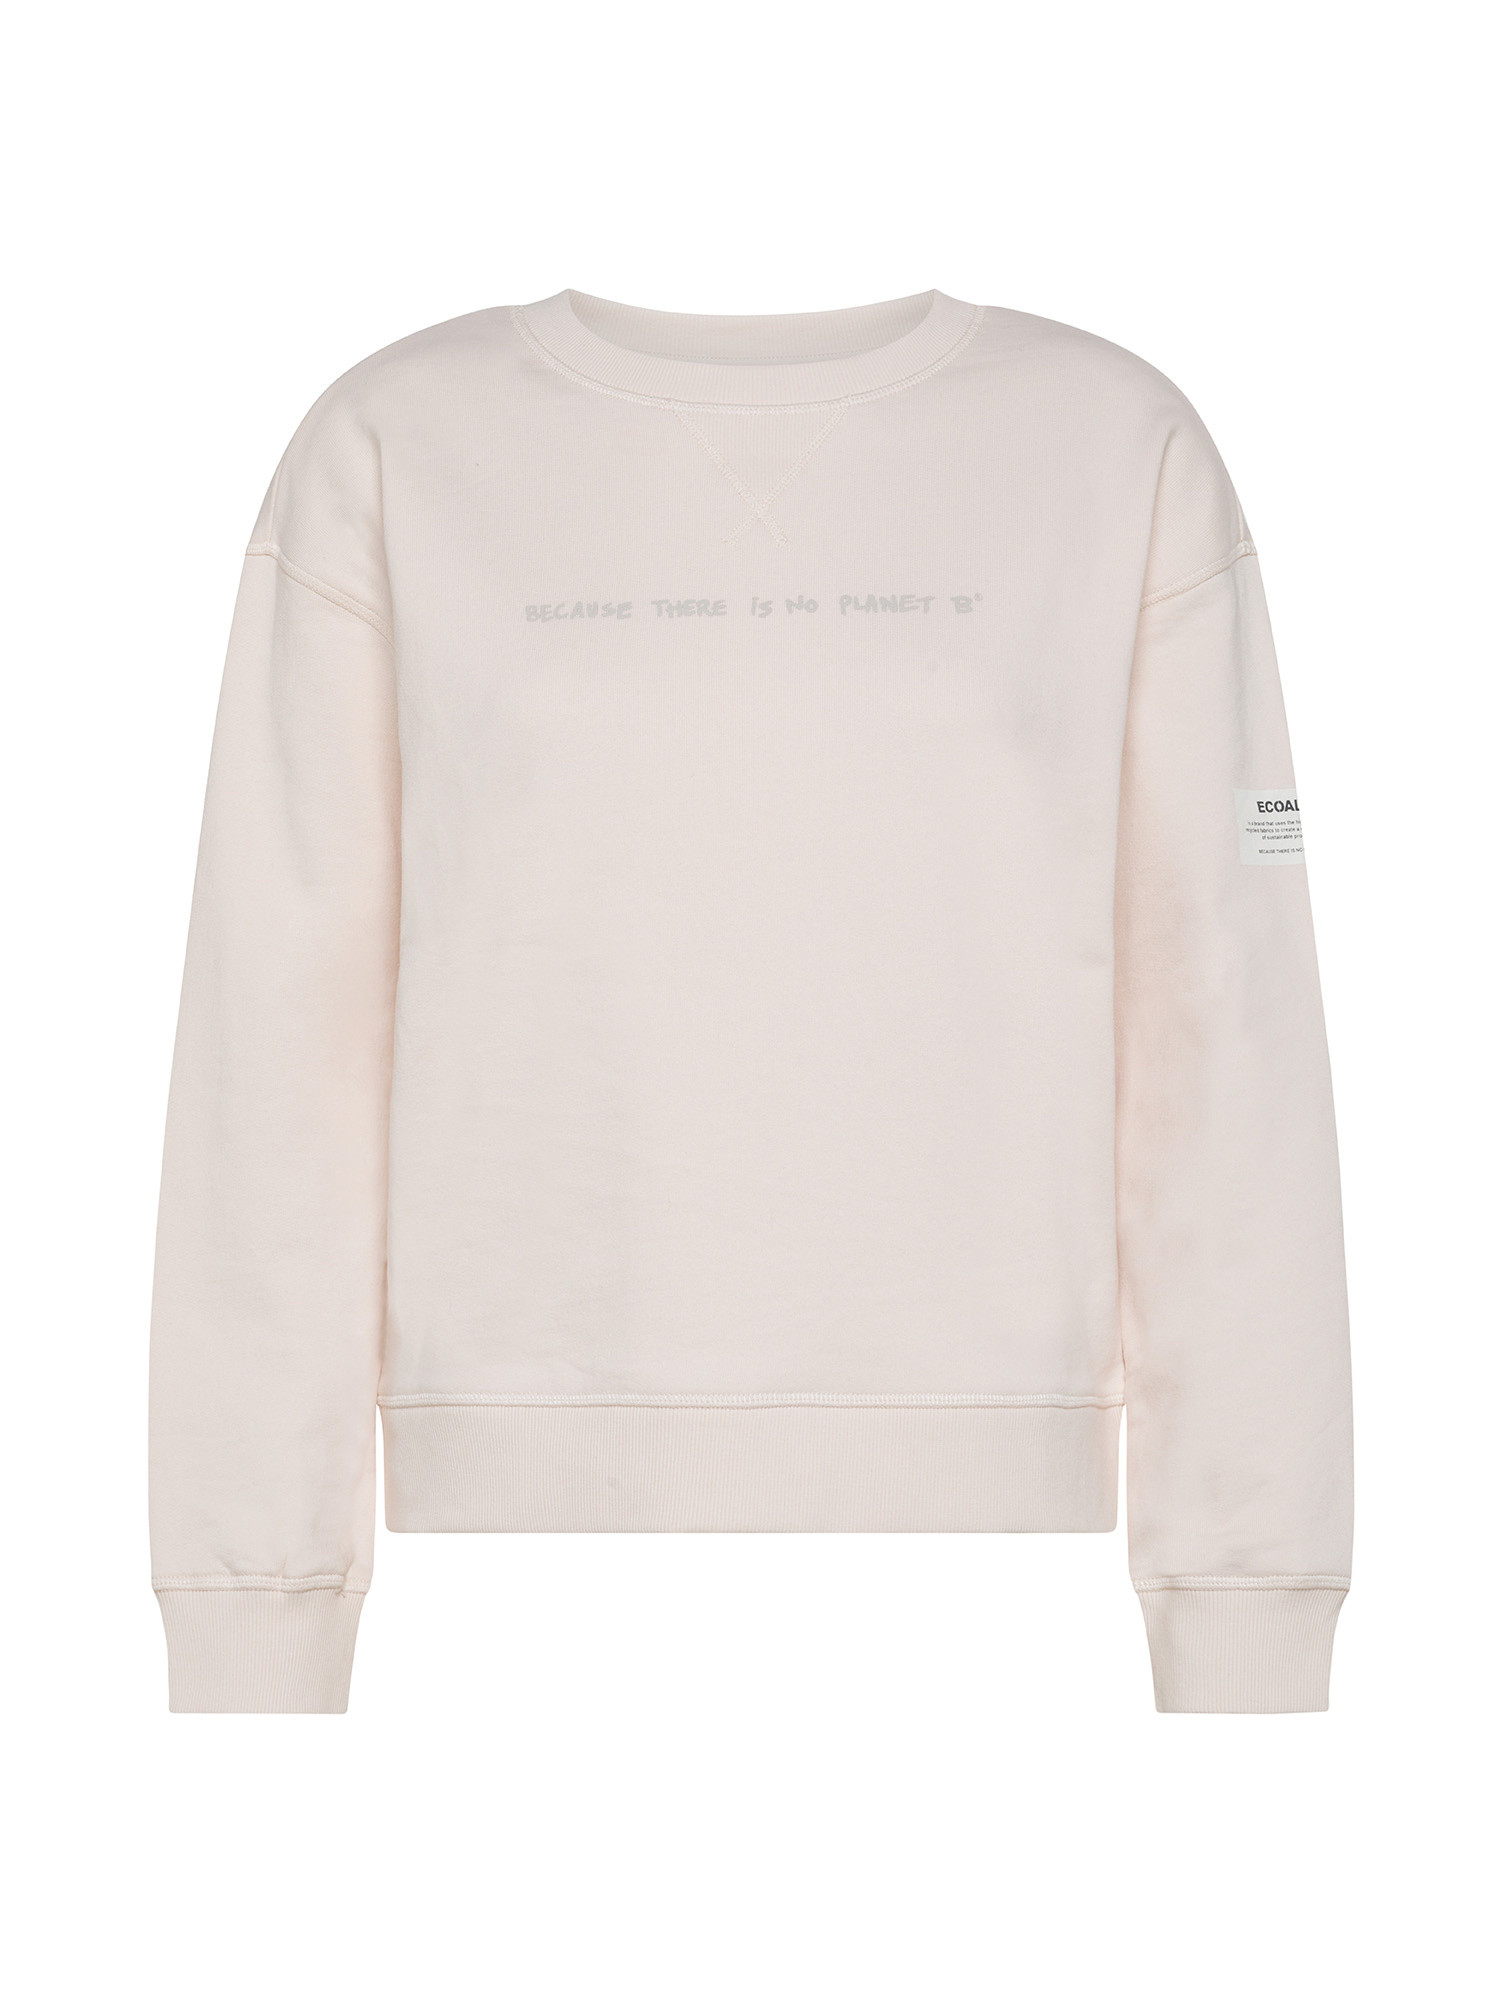 Ecoalf - Cagliari sweatshirt with writing, White Cream, large image number 0